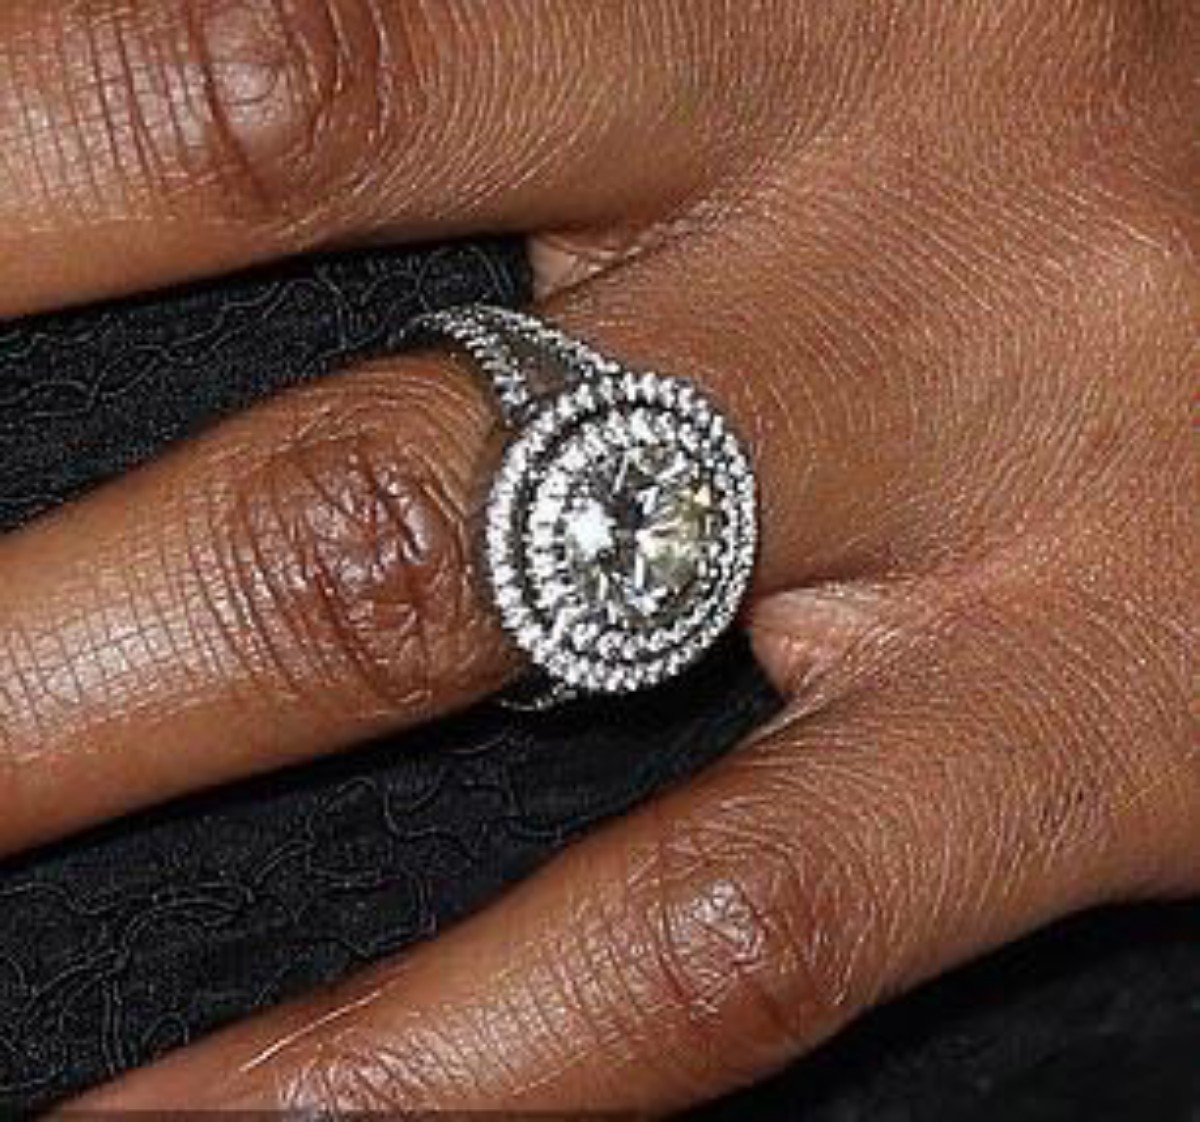 David Otunga Puts Jennifer Hudson’s $45K Diamond Engagement Ring Up For Auction